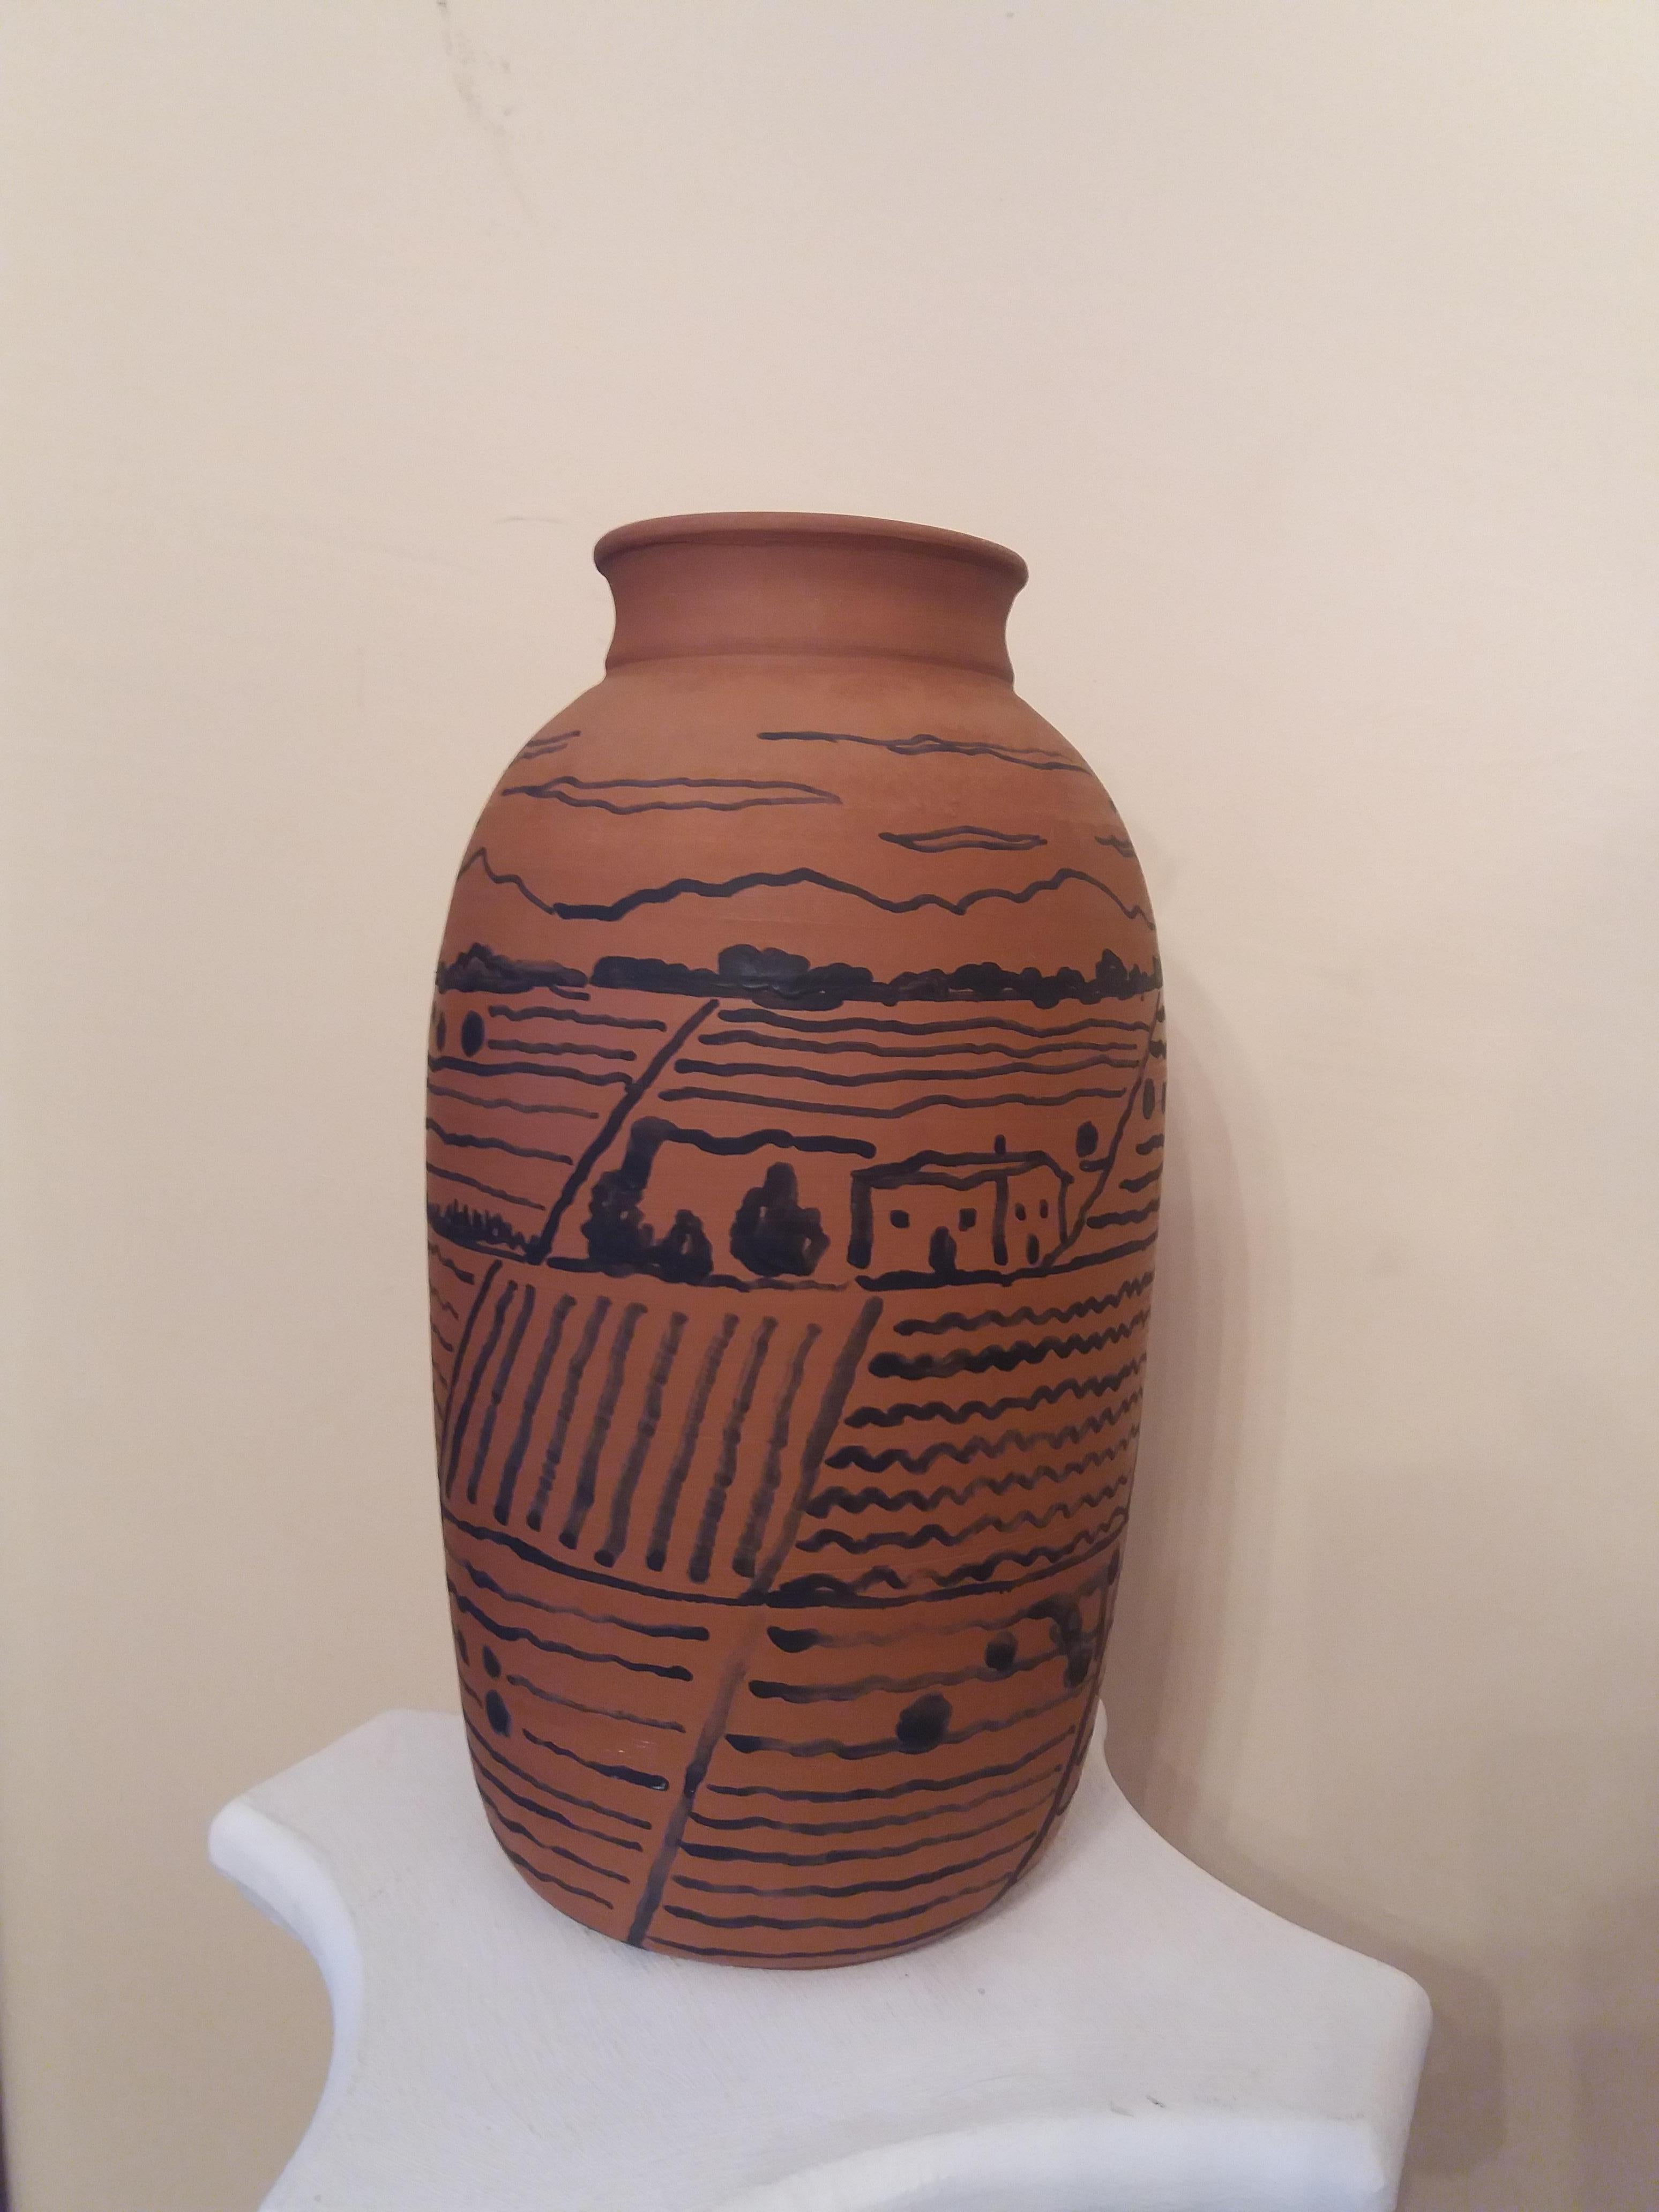  Graspar Riera  6 Terracotta Cylinder  Mallorca original ceramic sculpture For Sale 1